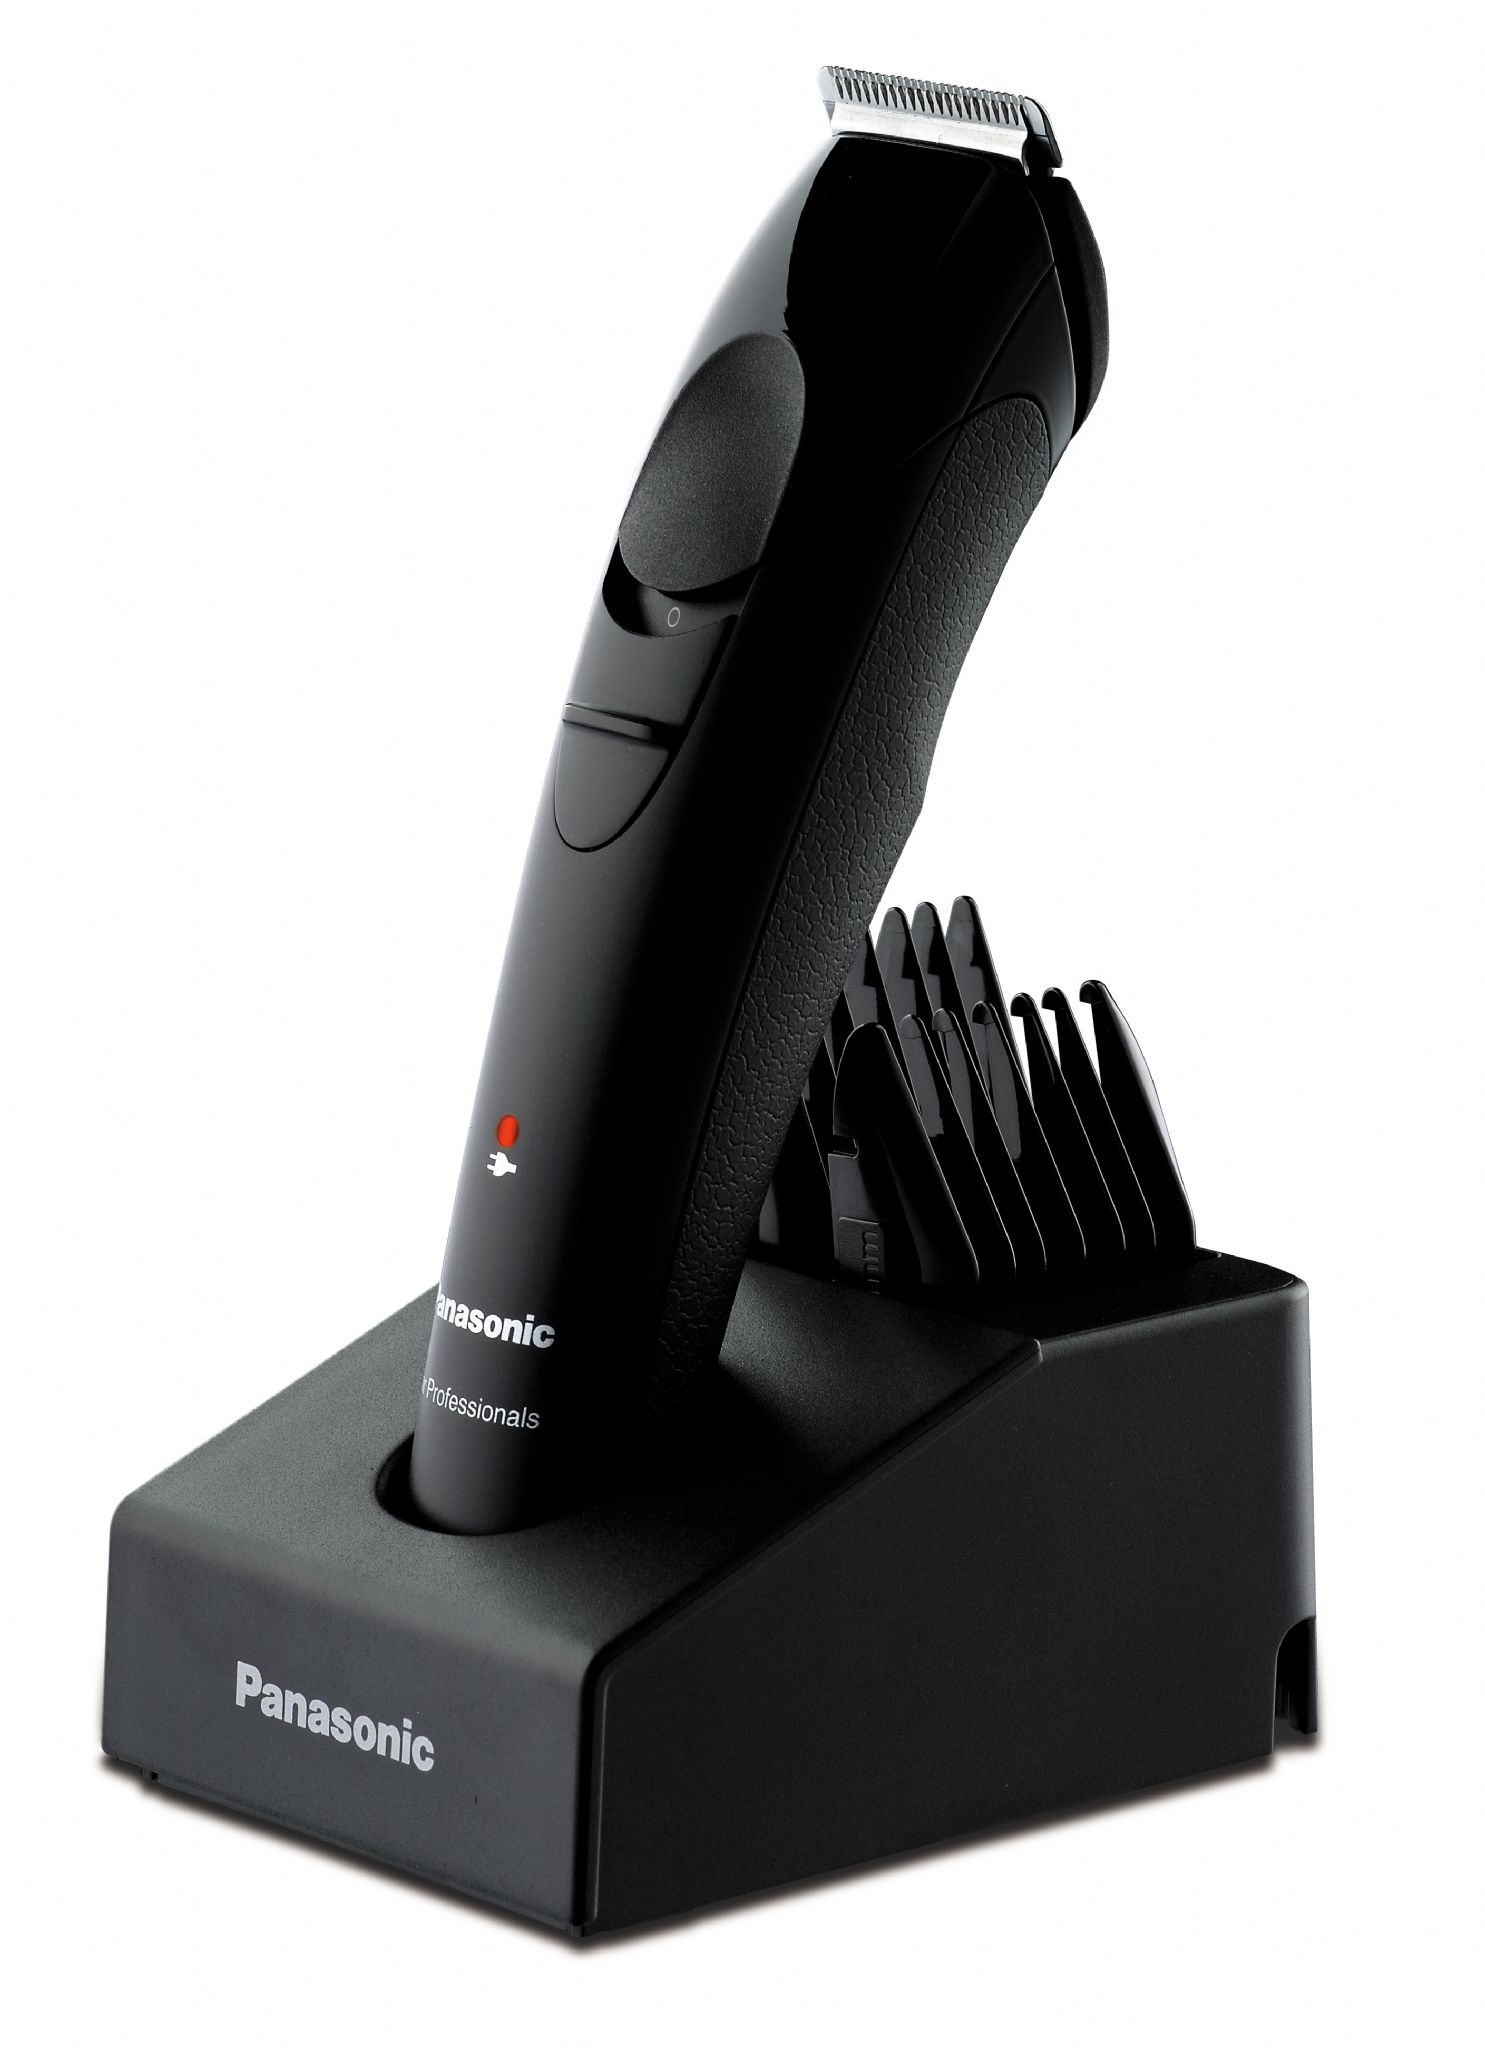 Panasonic ER-GP21 K- Professional Hair Trimmer